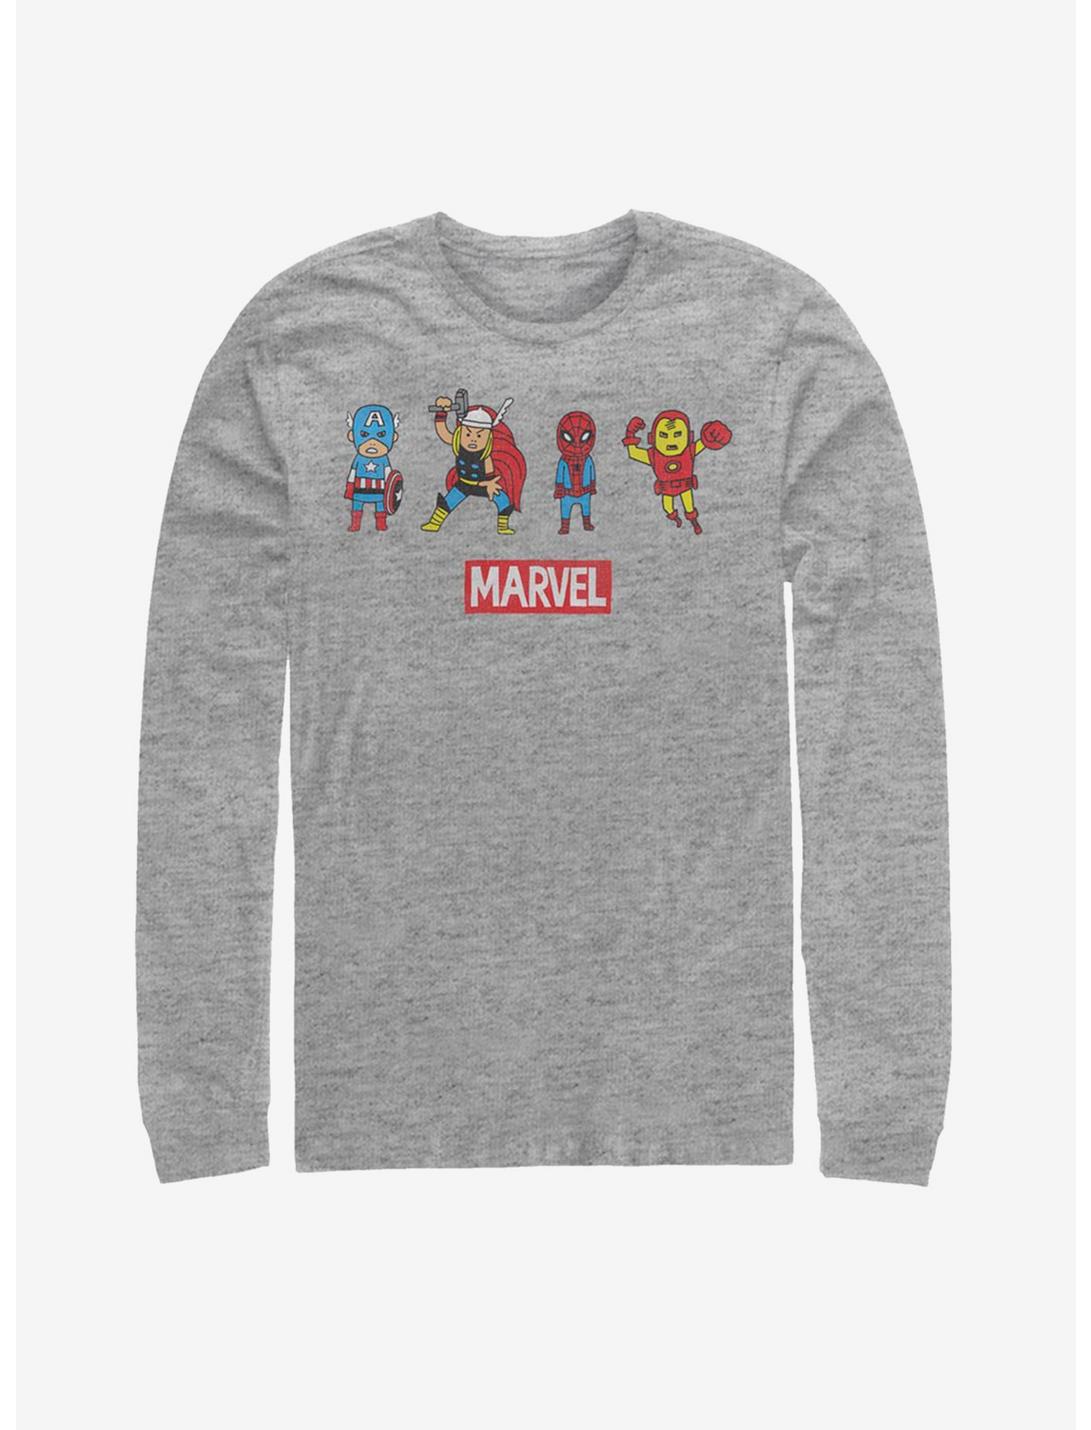 Marvel Avengers Pop Art Group Long-Sleeve T-Shirt, ATH HTR, hi-res